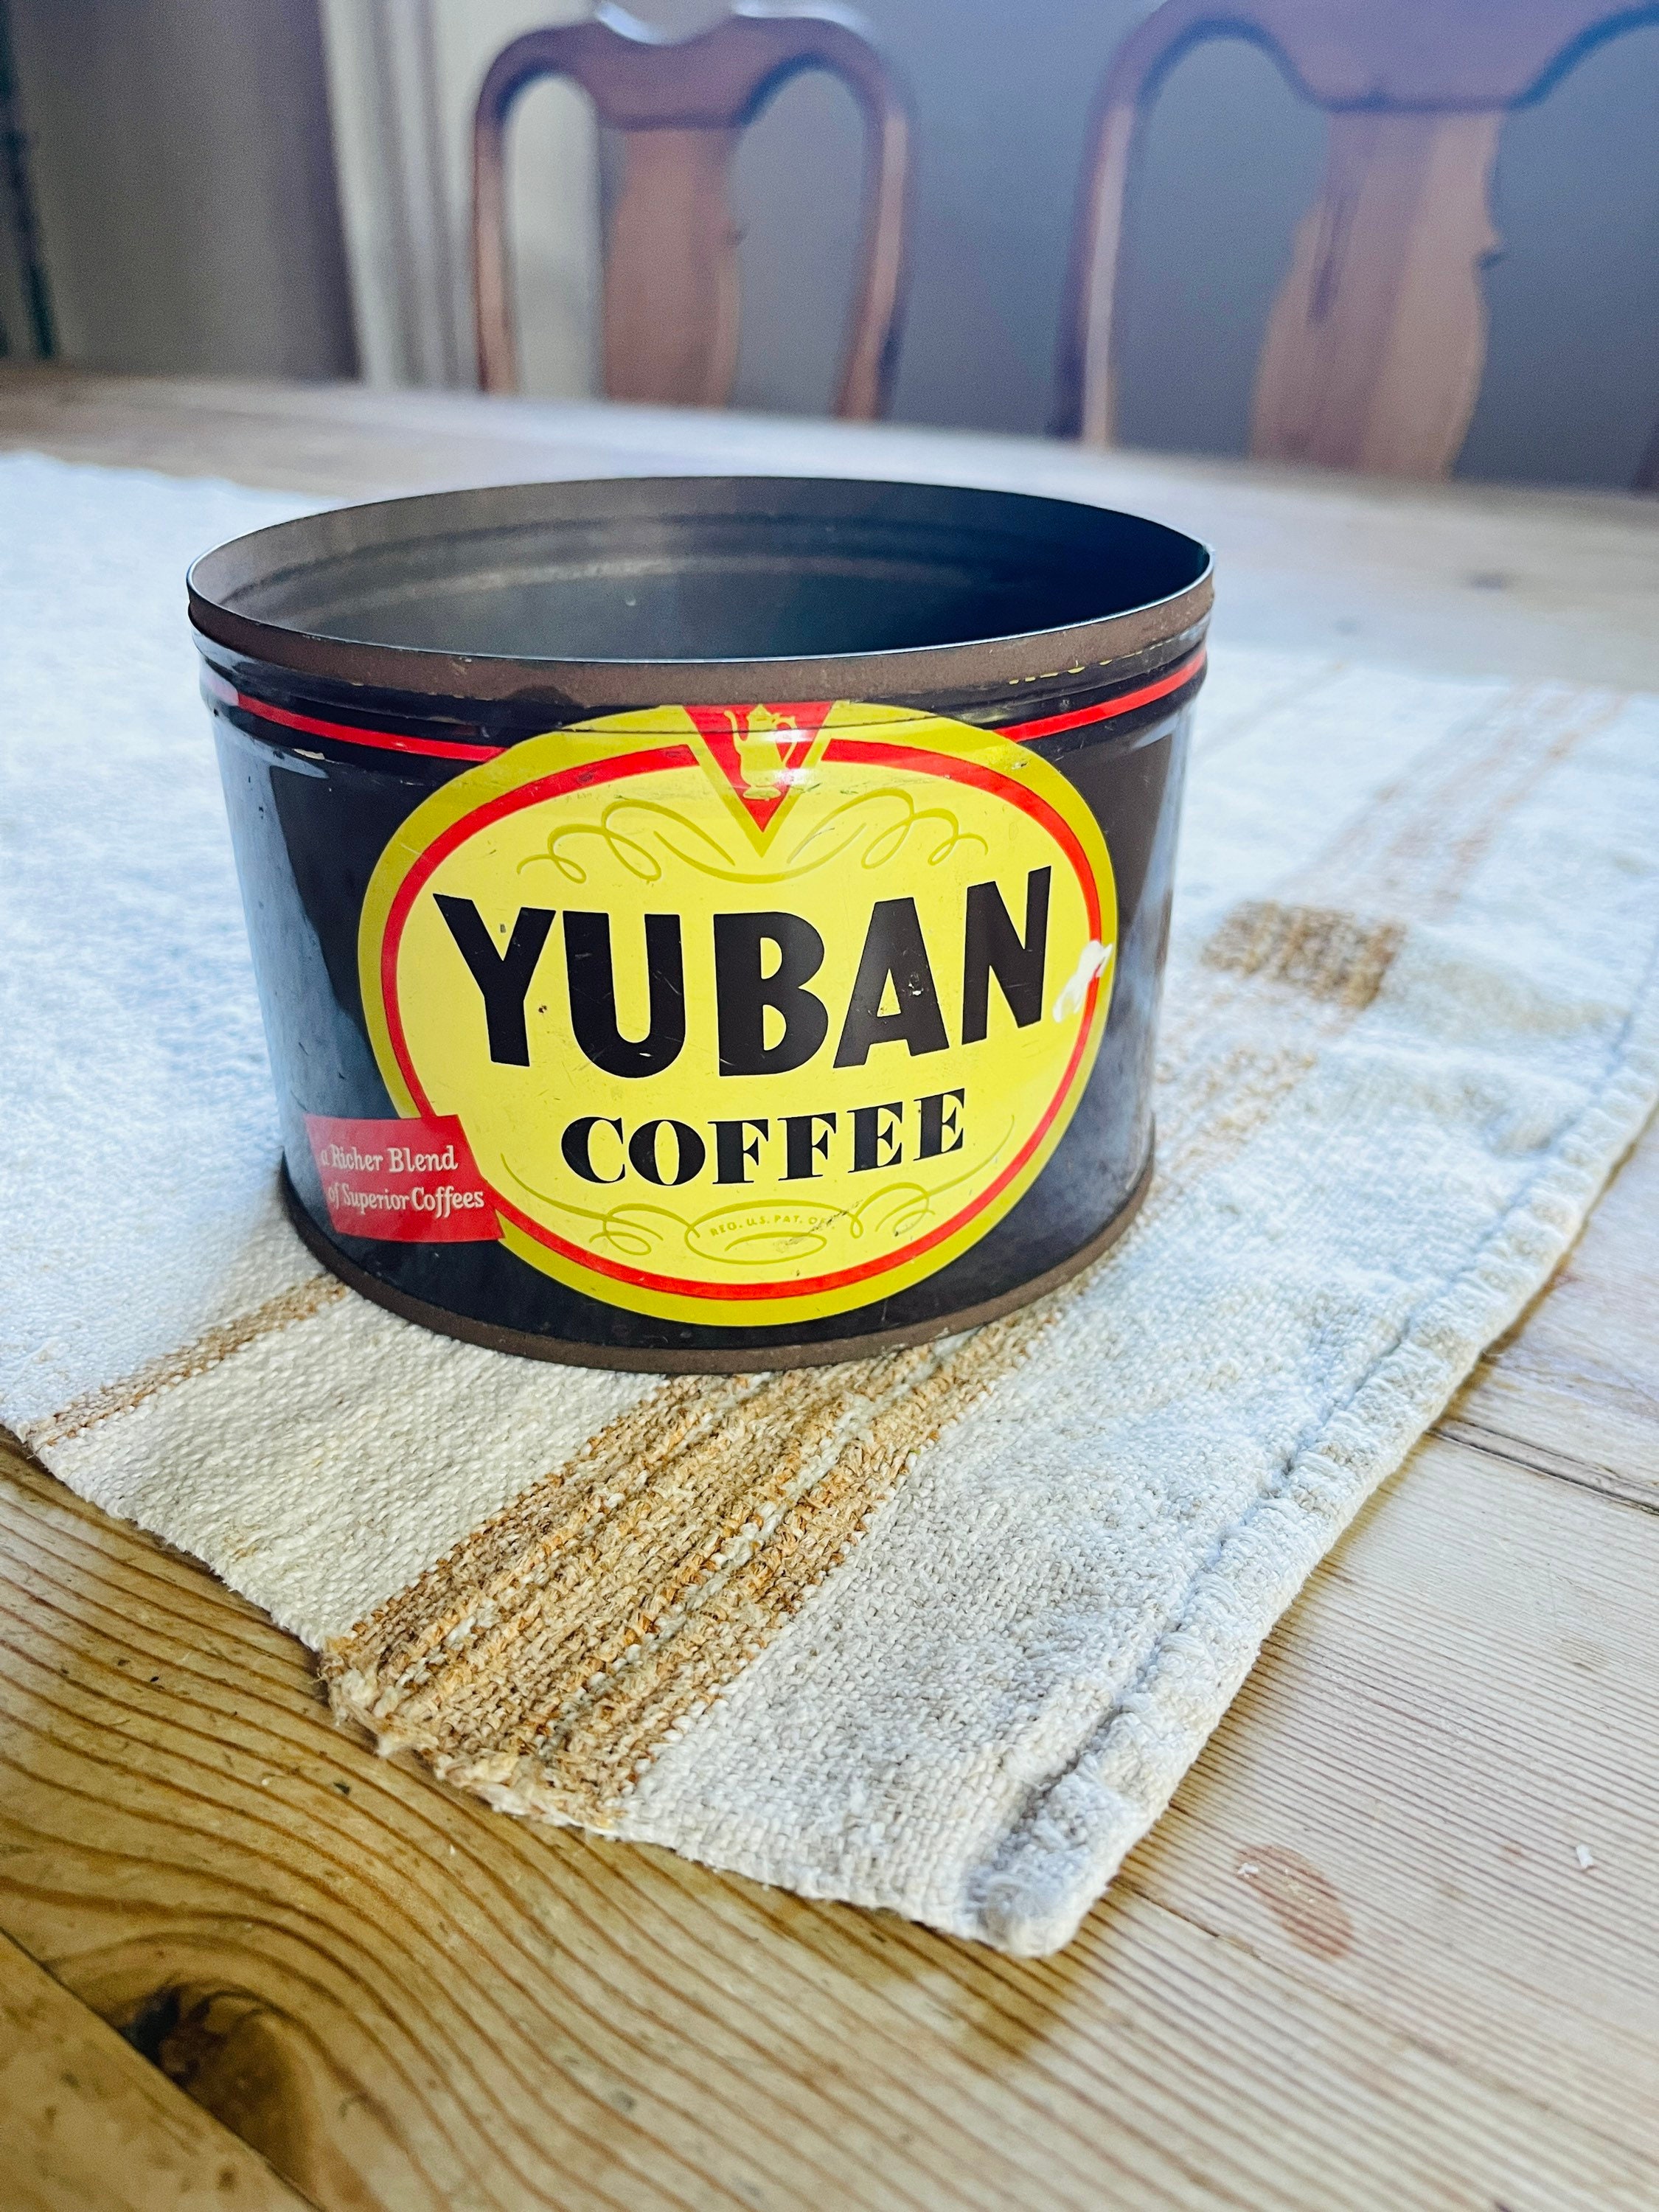 Vintage Yuban & Bliss Coffee Tins circa 1920s-1940s - Sold